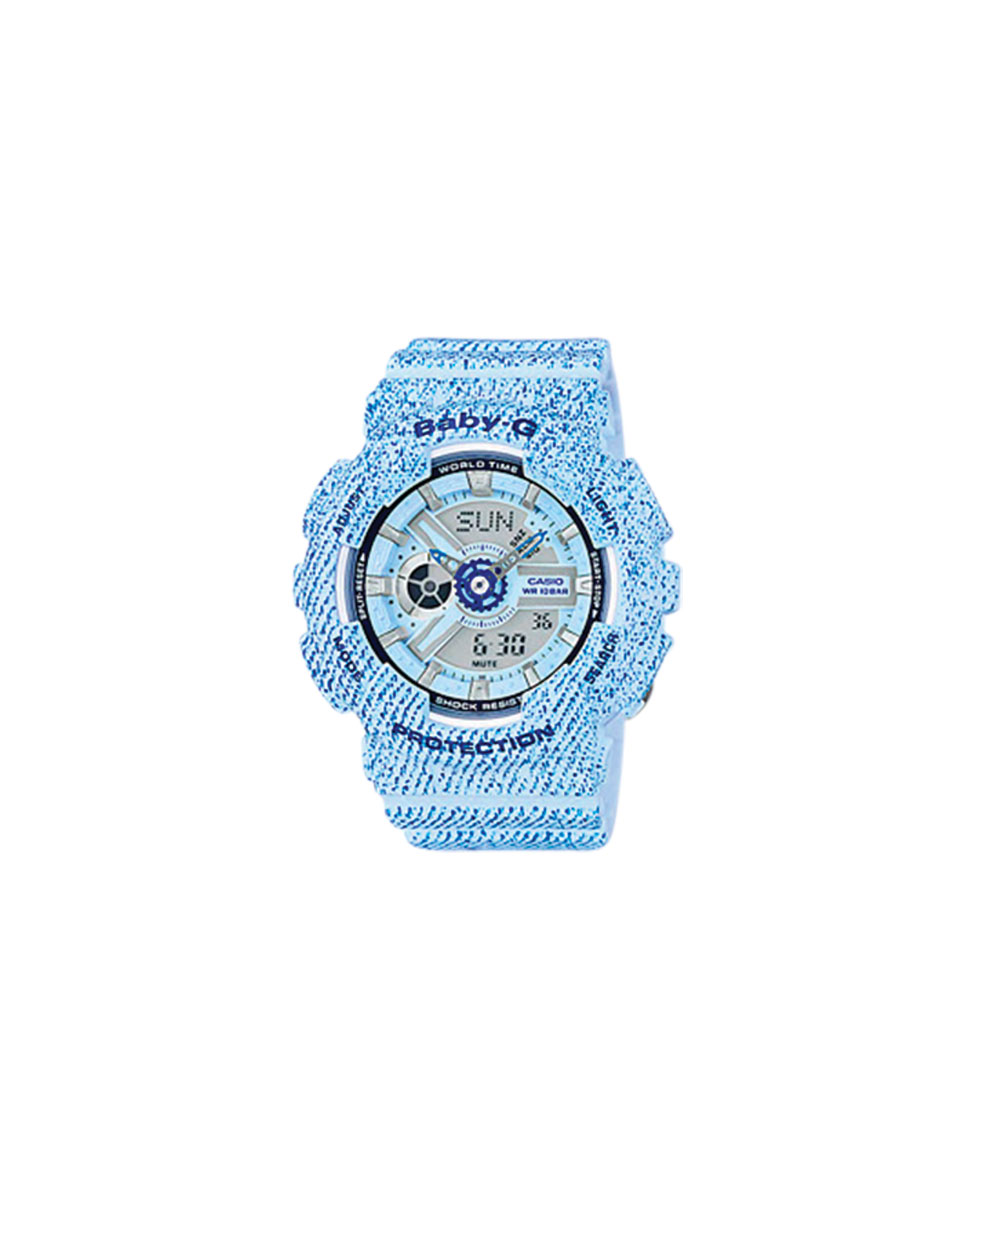 Baby G watch, $279